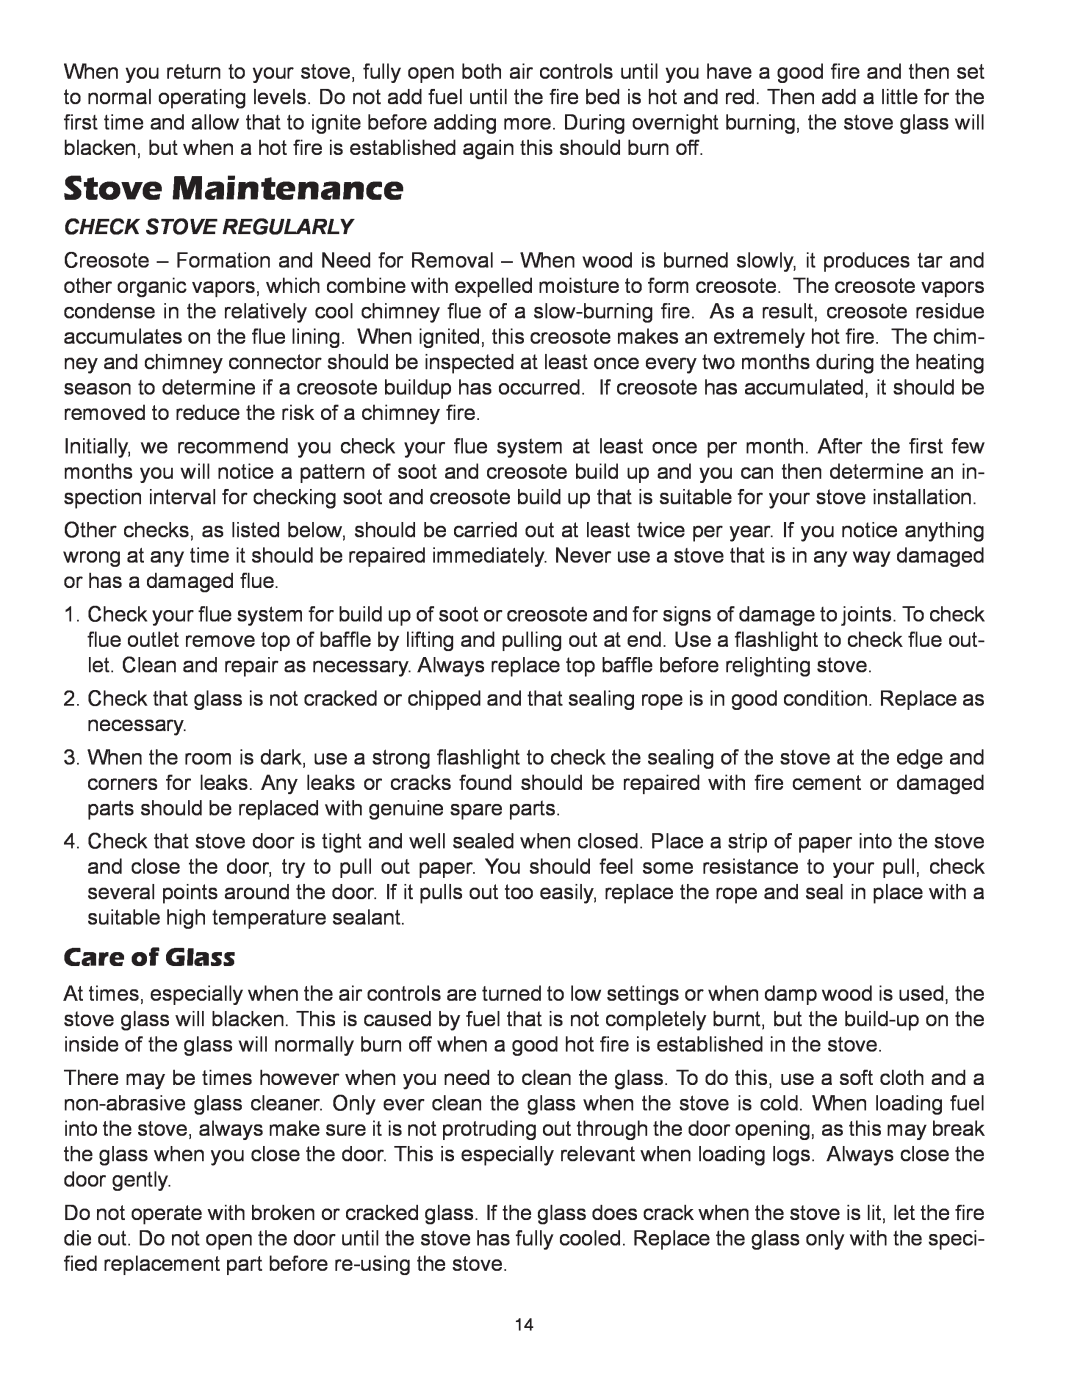 United States Stove 3500PB, 3700PB owner manual Stove Maintenance, Care of Glass, Check Stove Regularly 